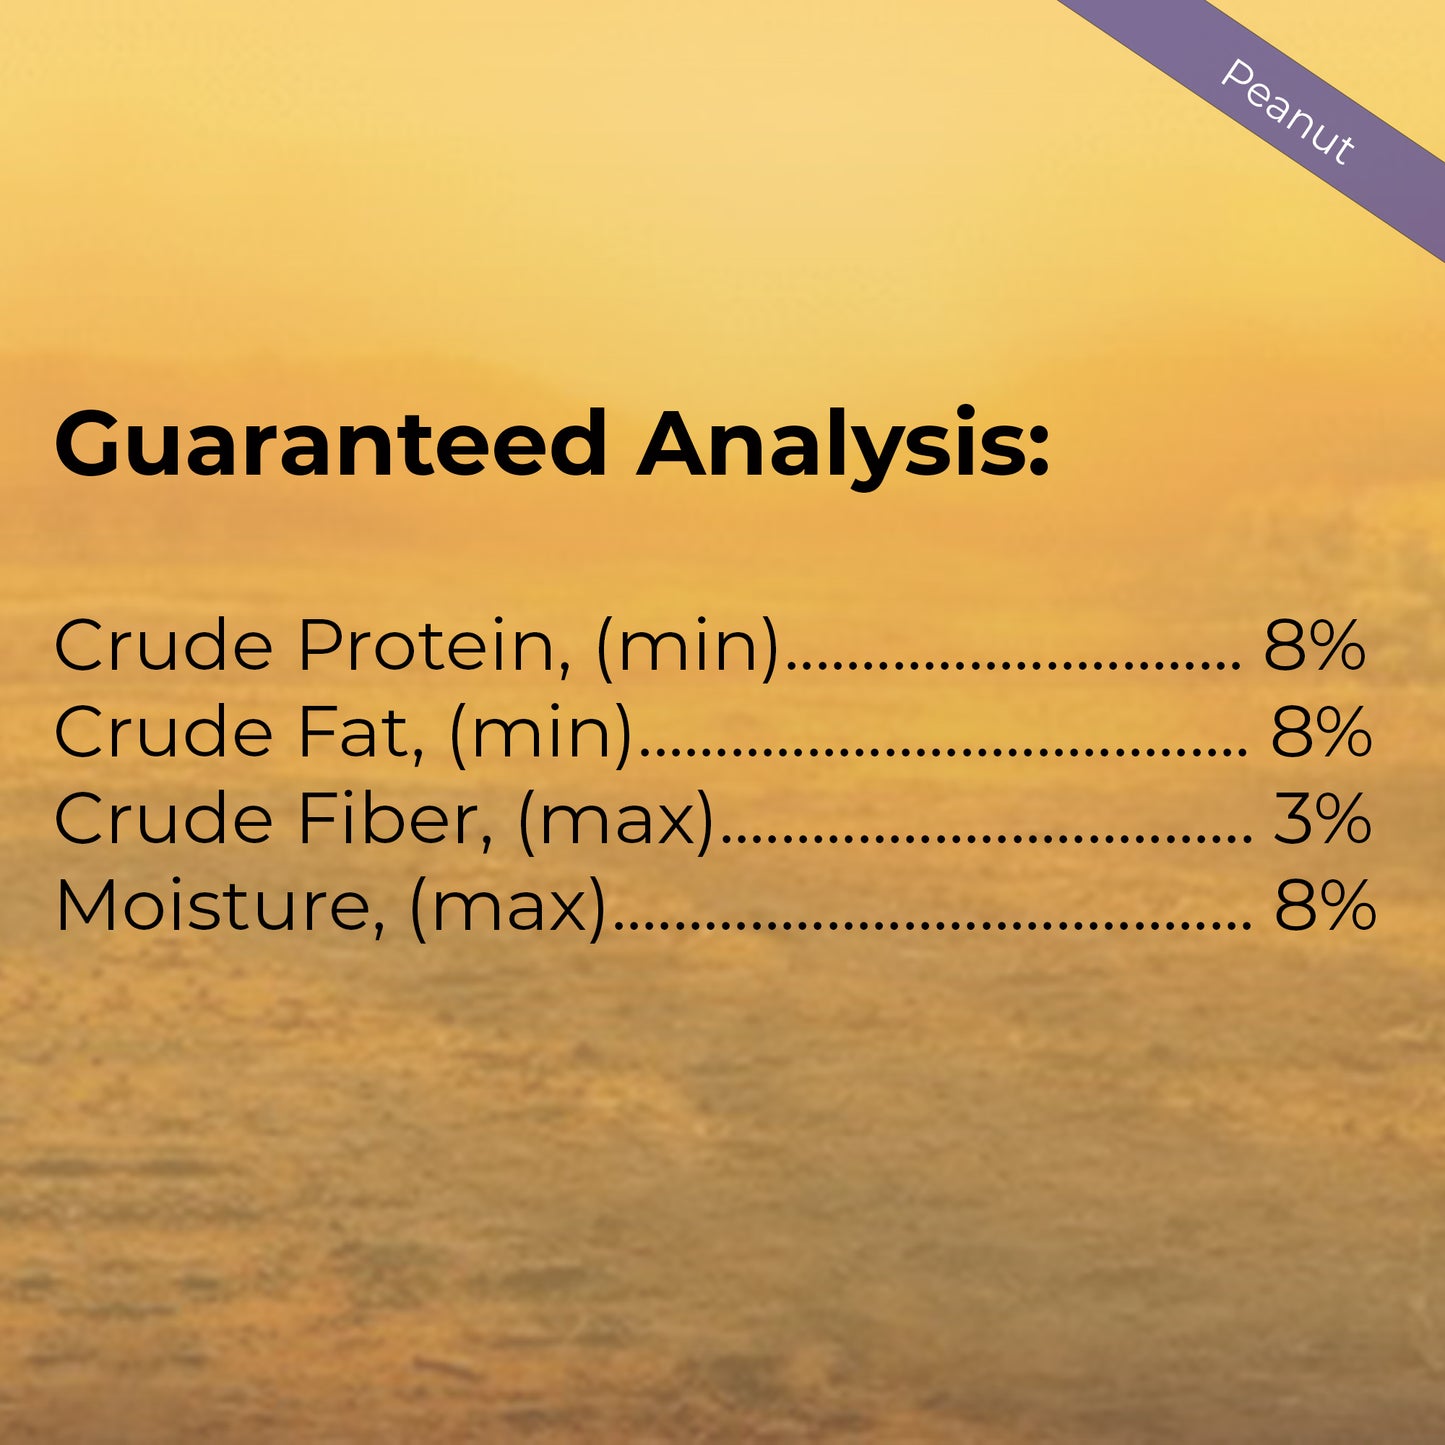 Guaranteed analysis listed: crude protein (min.) 8%, crude fat (min.) 8%, crude fiber (max.) 3%, moisture (max) 8%